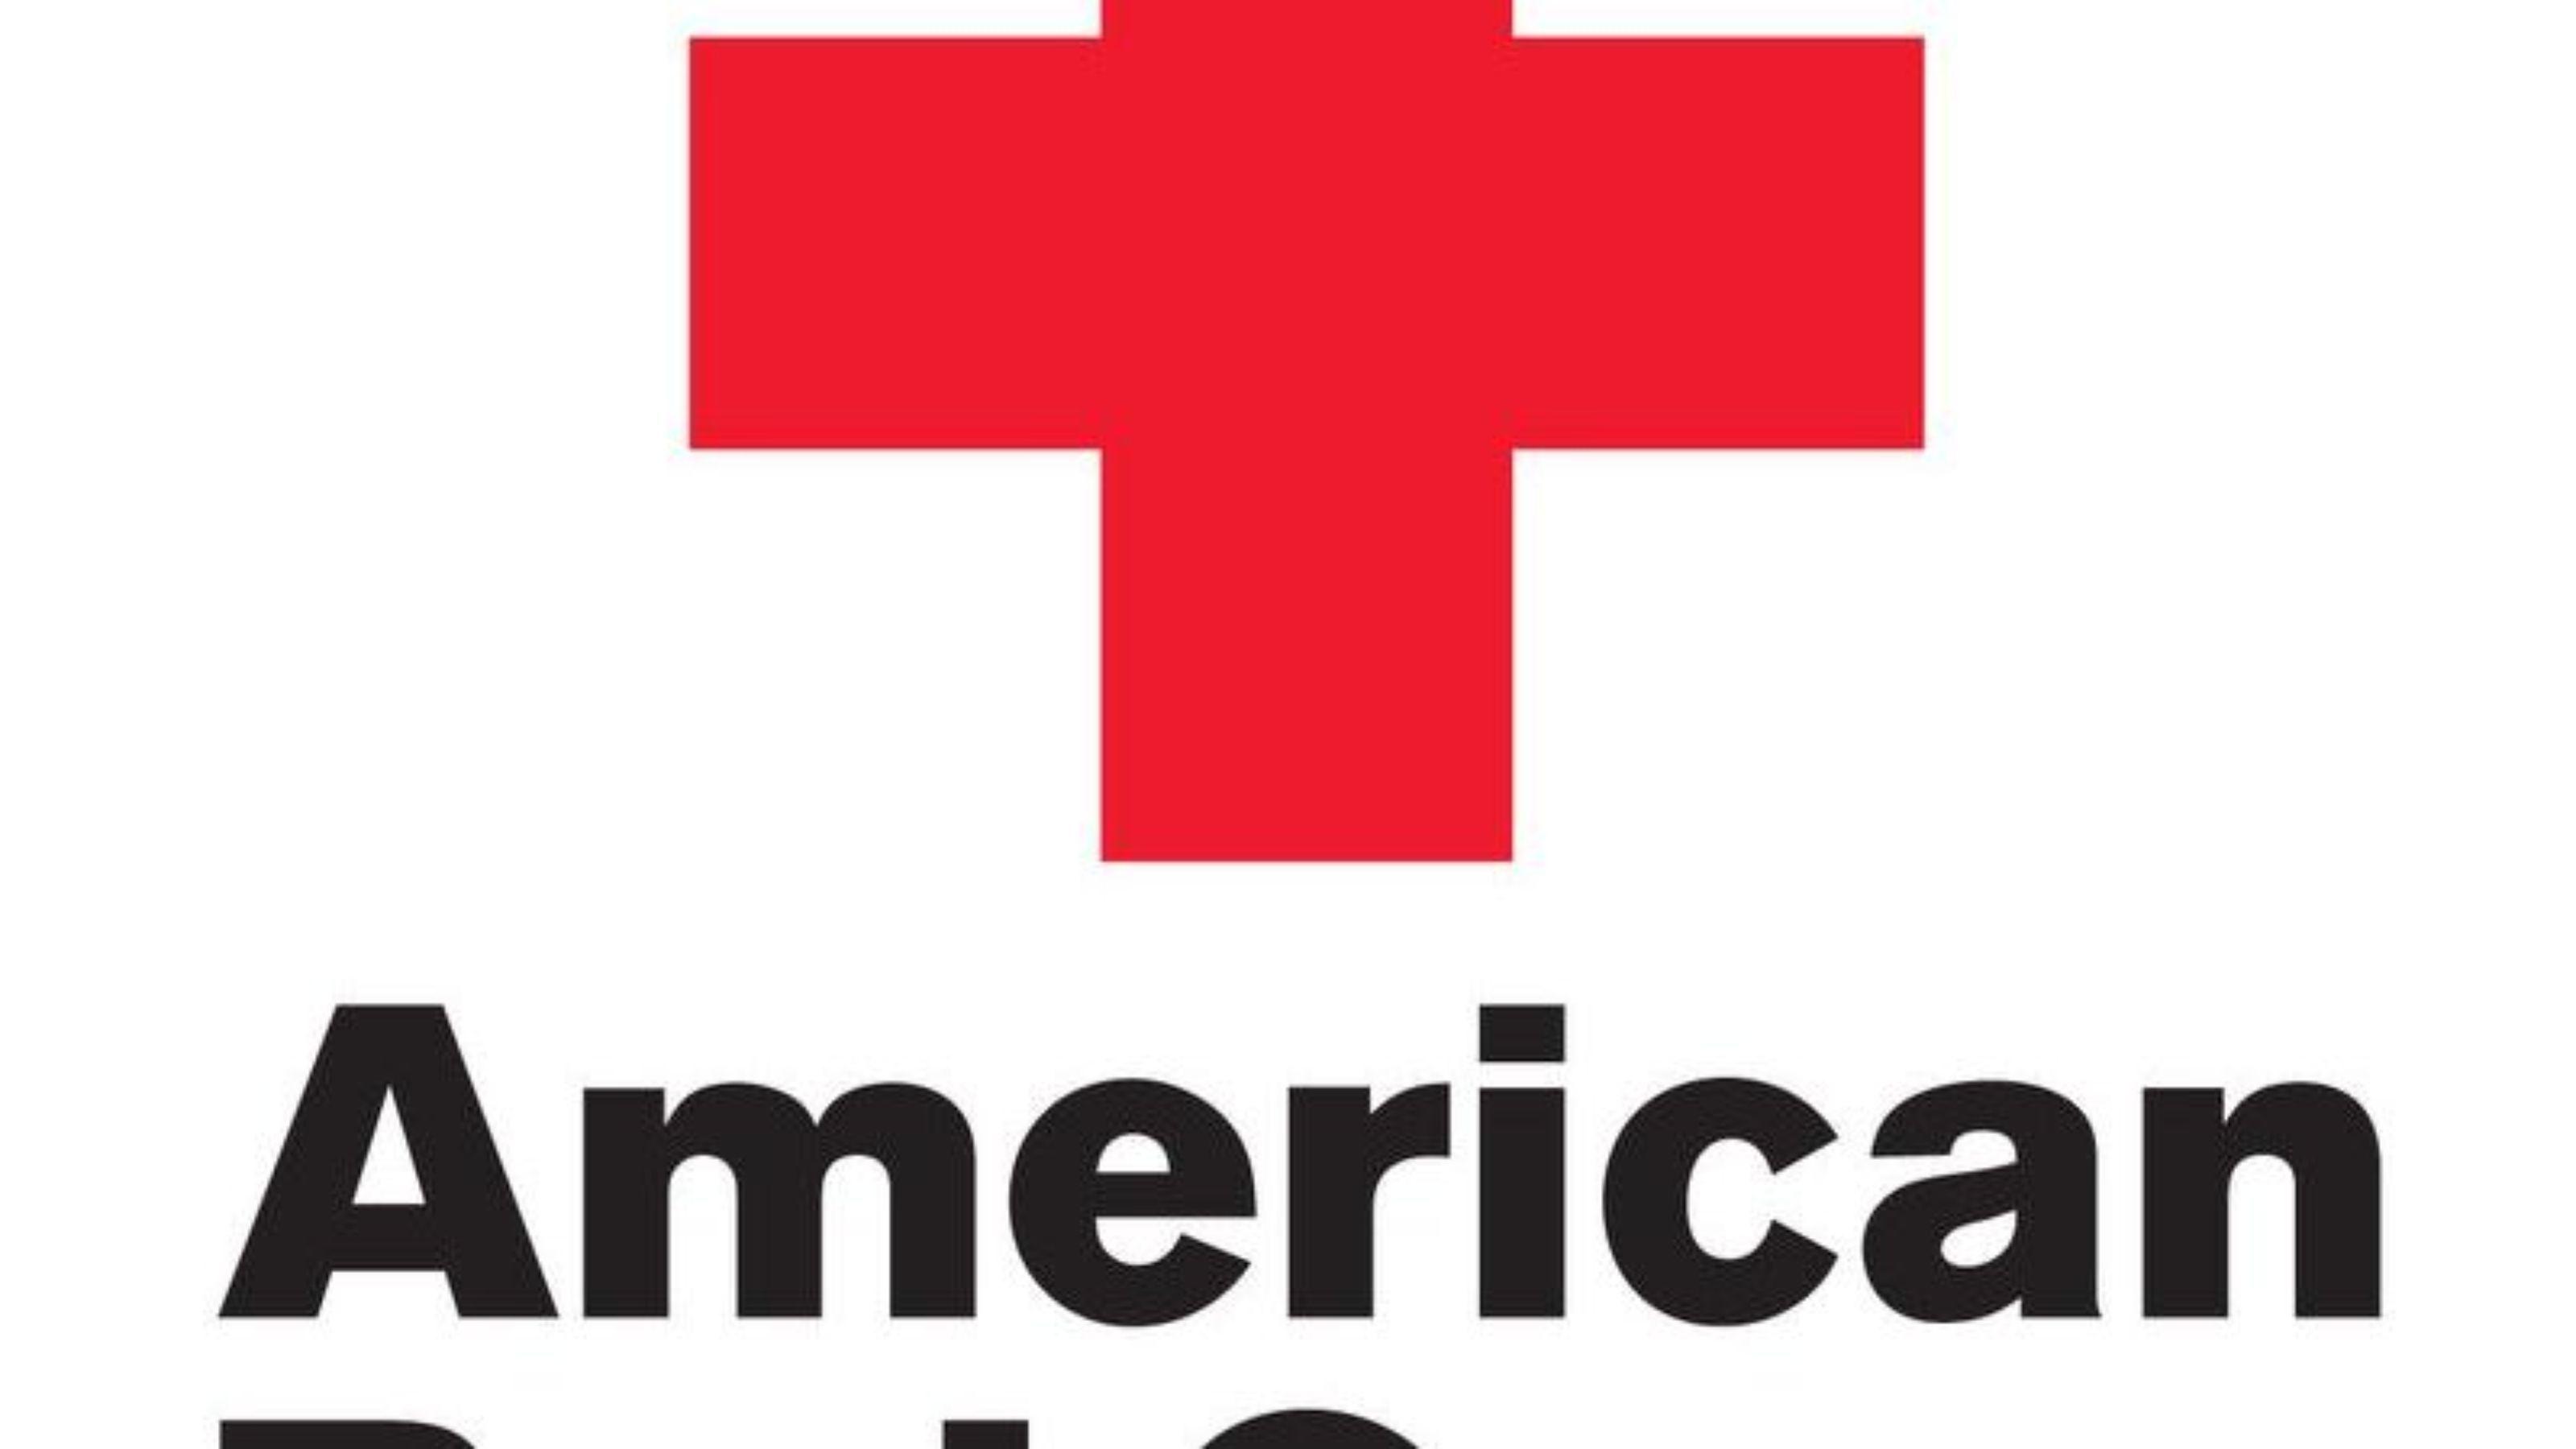 Official American Red Cross Logo - American red cross Logos